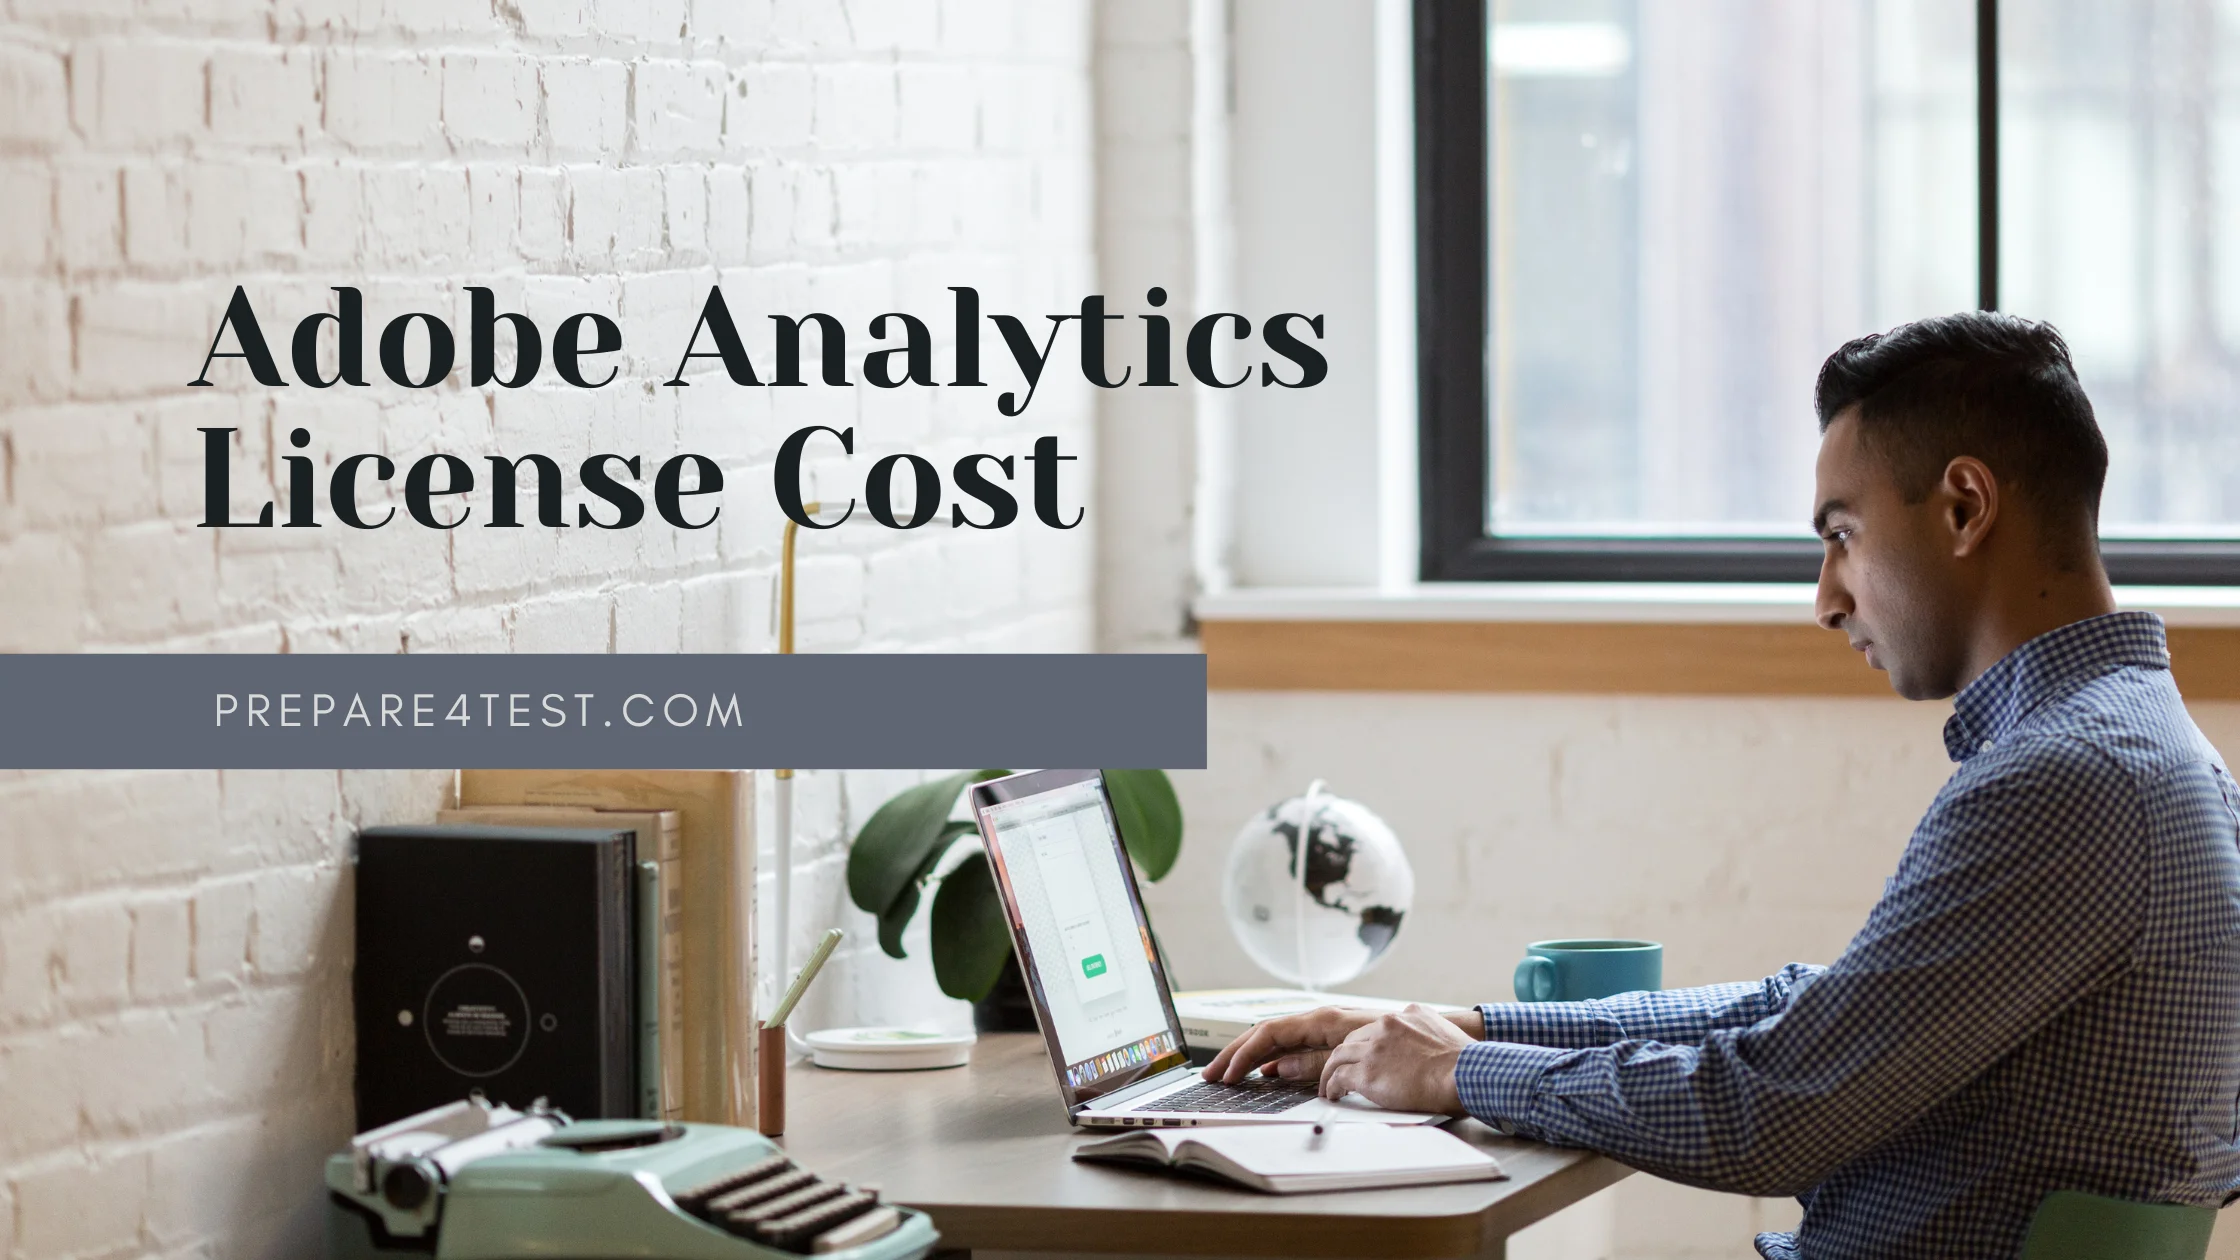 Adobe Analytics License Cost guarantee